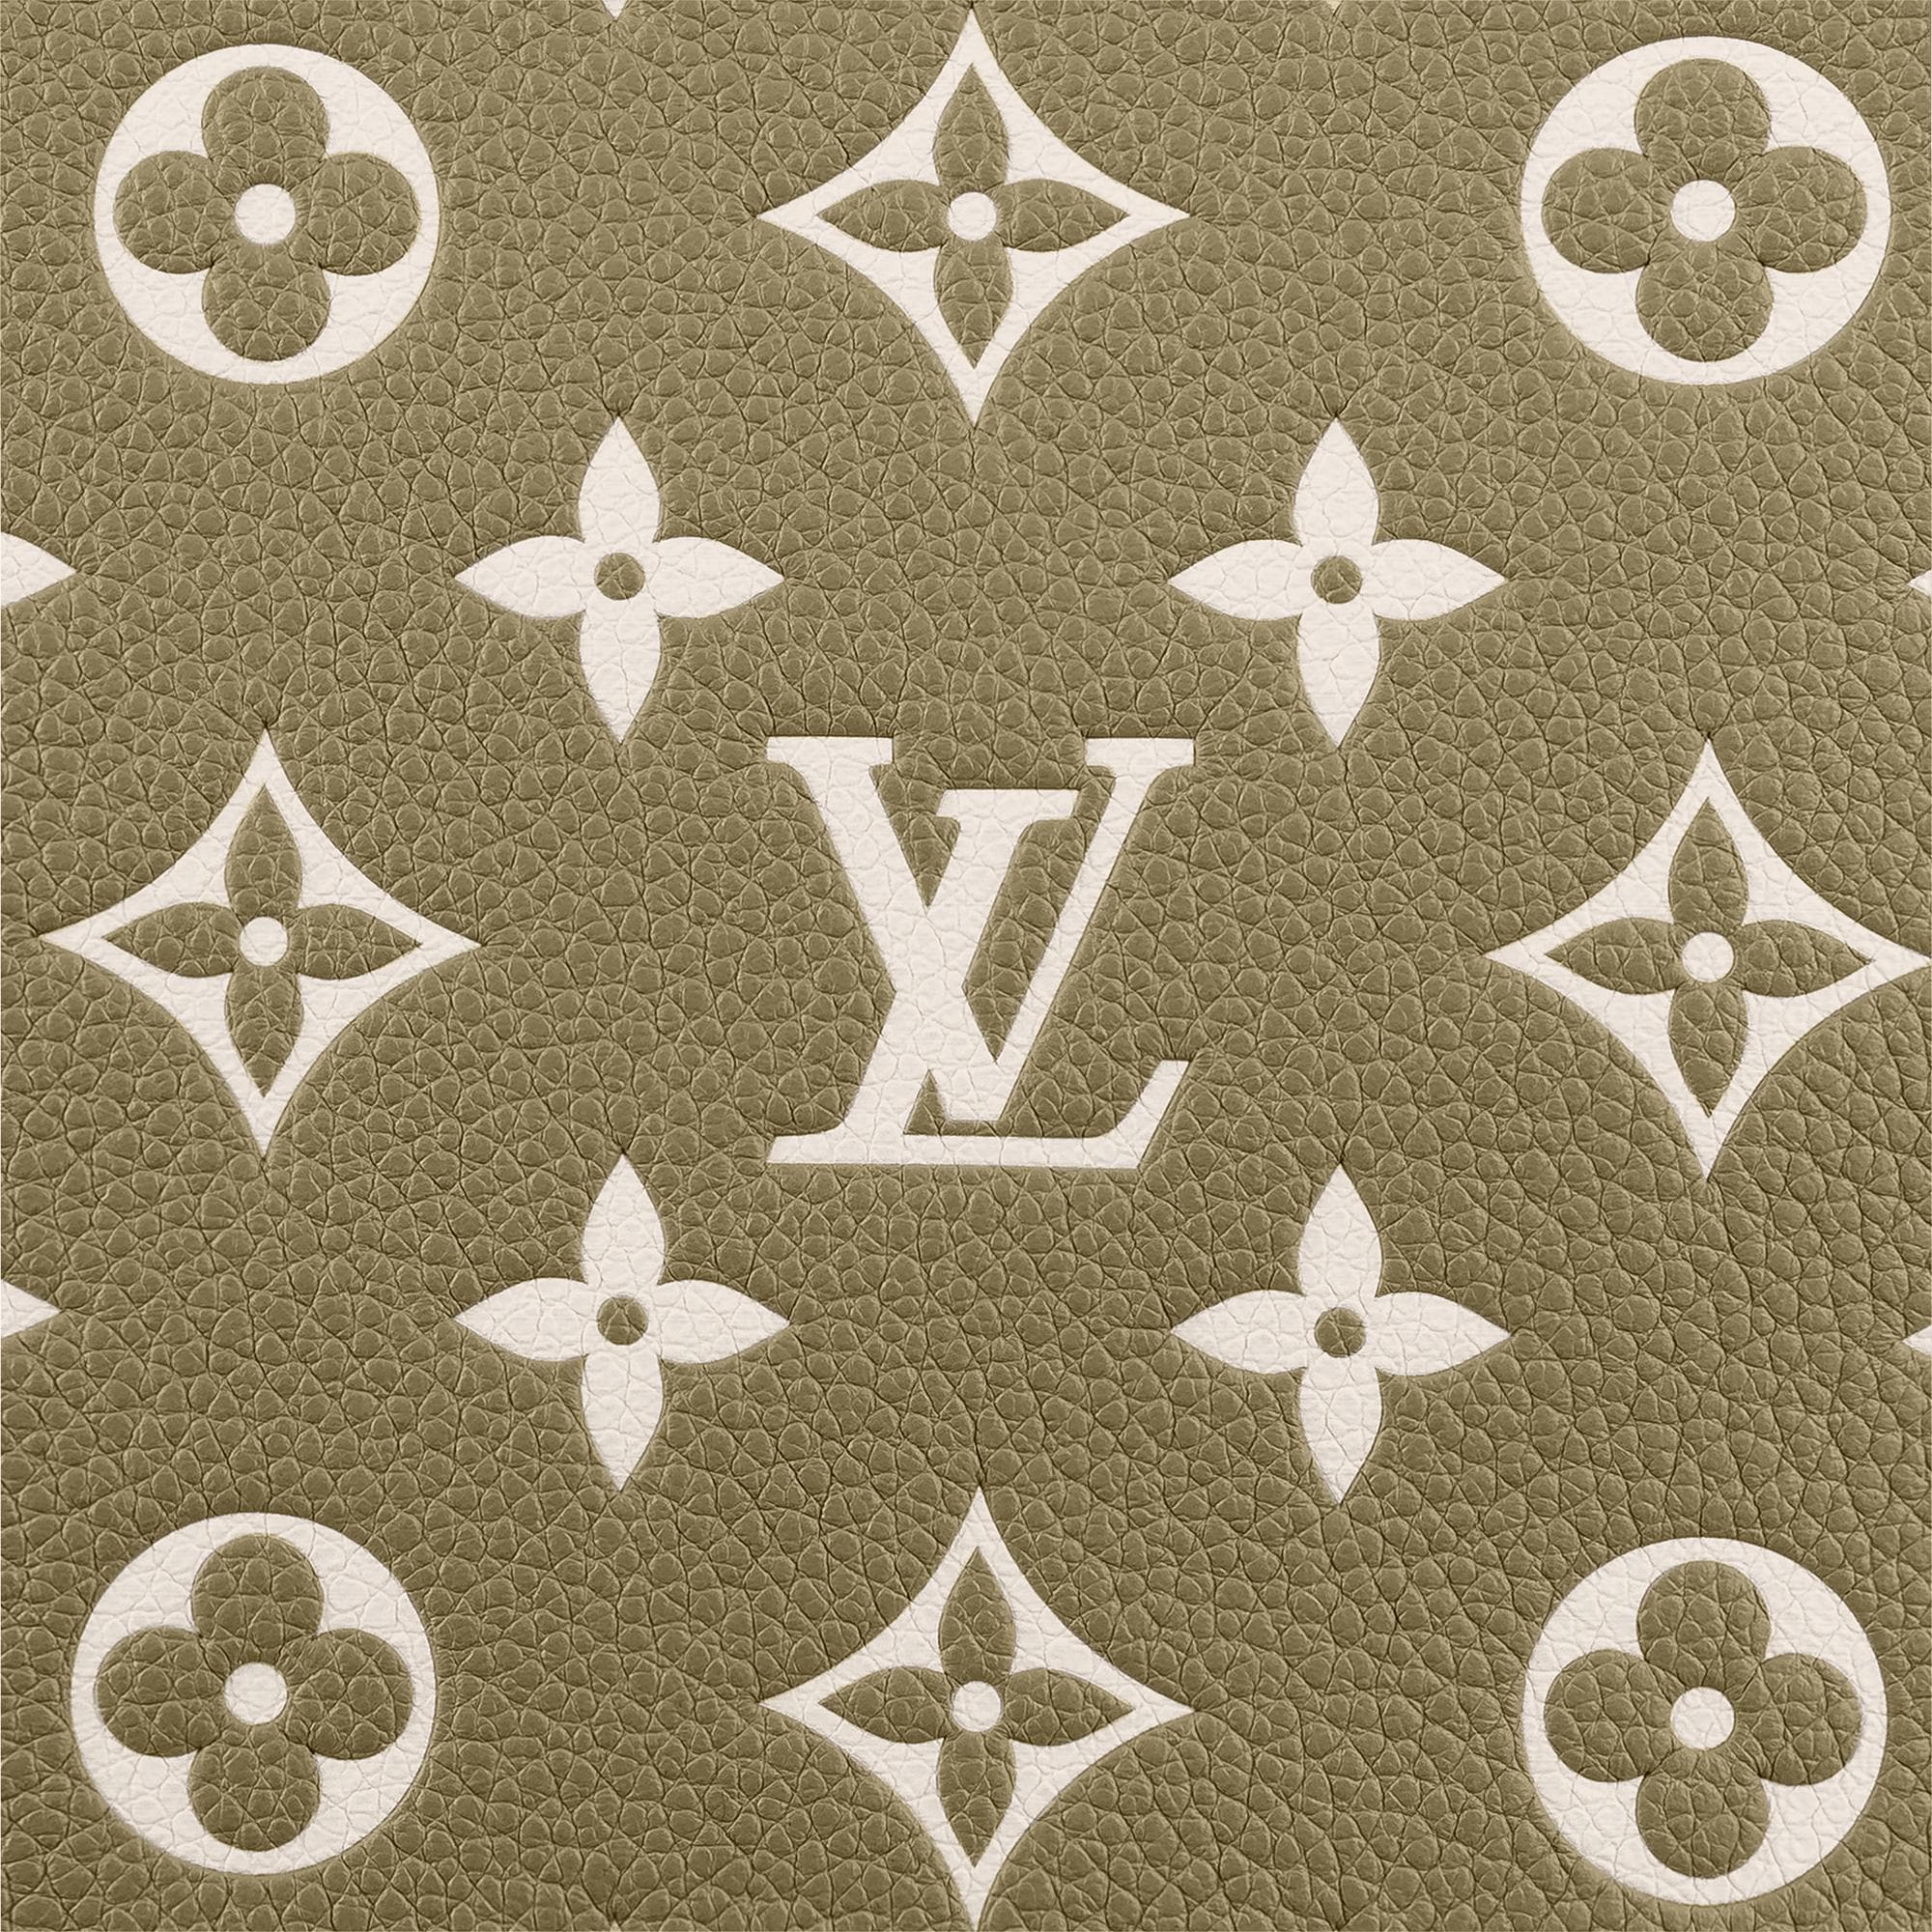 MYTH: Authentic Louis Vuitton Never Has Cut-off Monogram - Academy